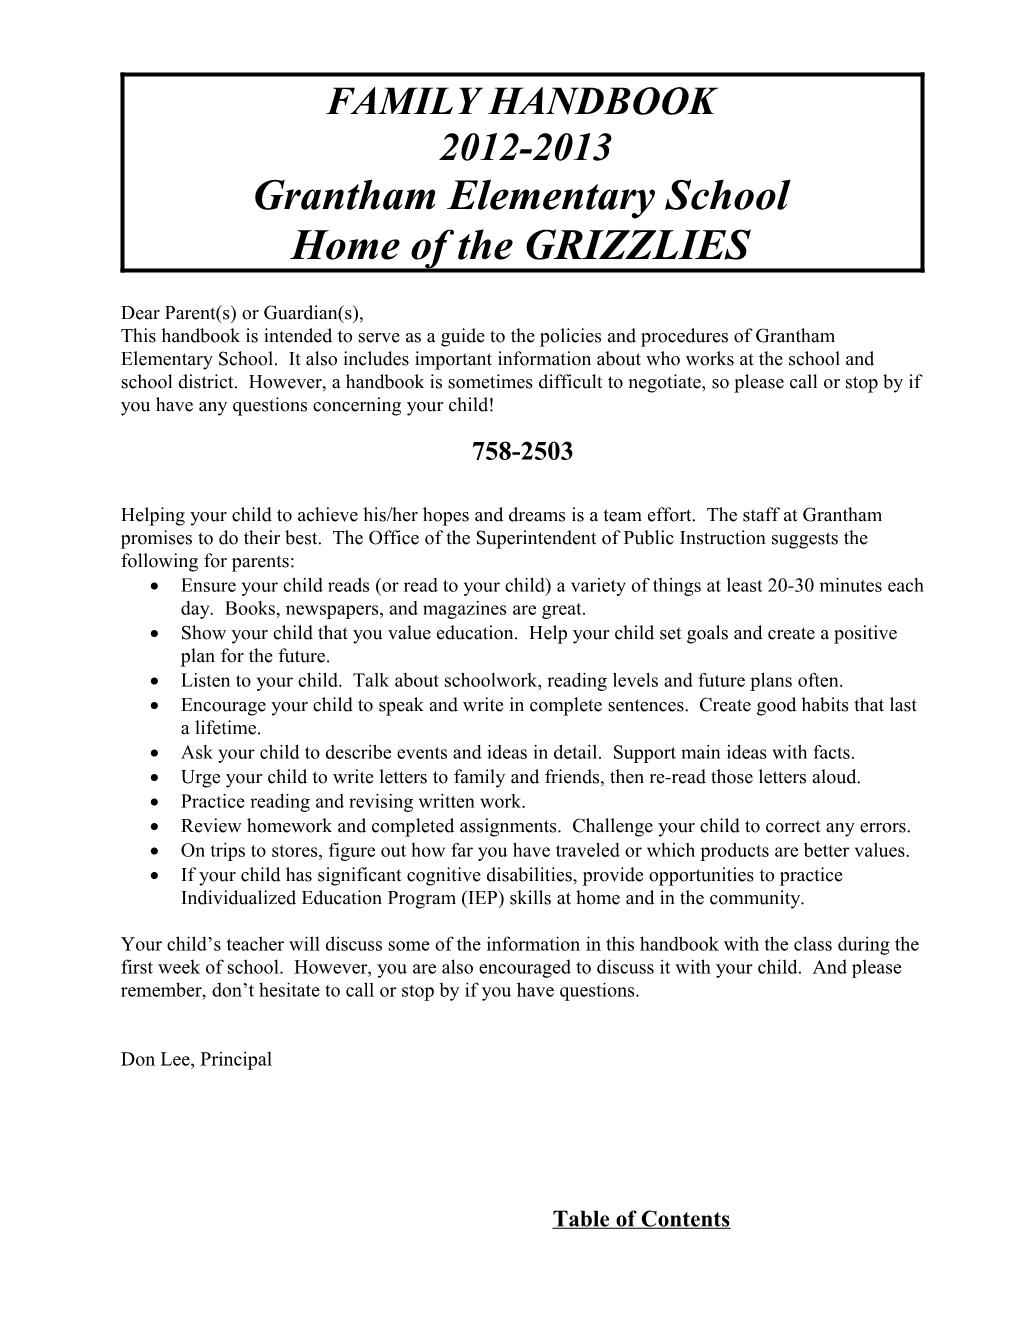 Grantham Elementary School